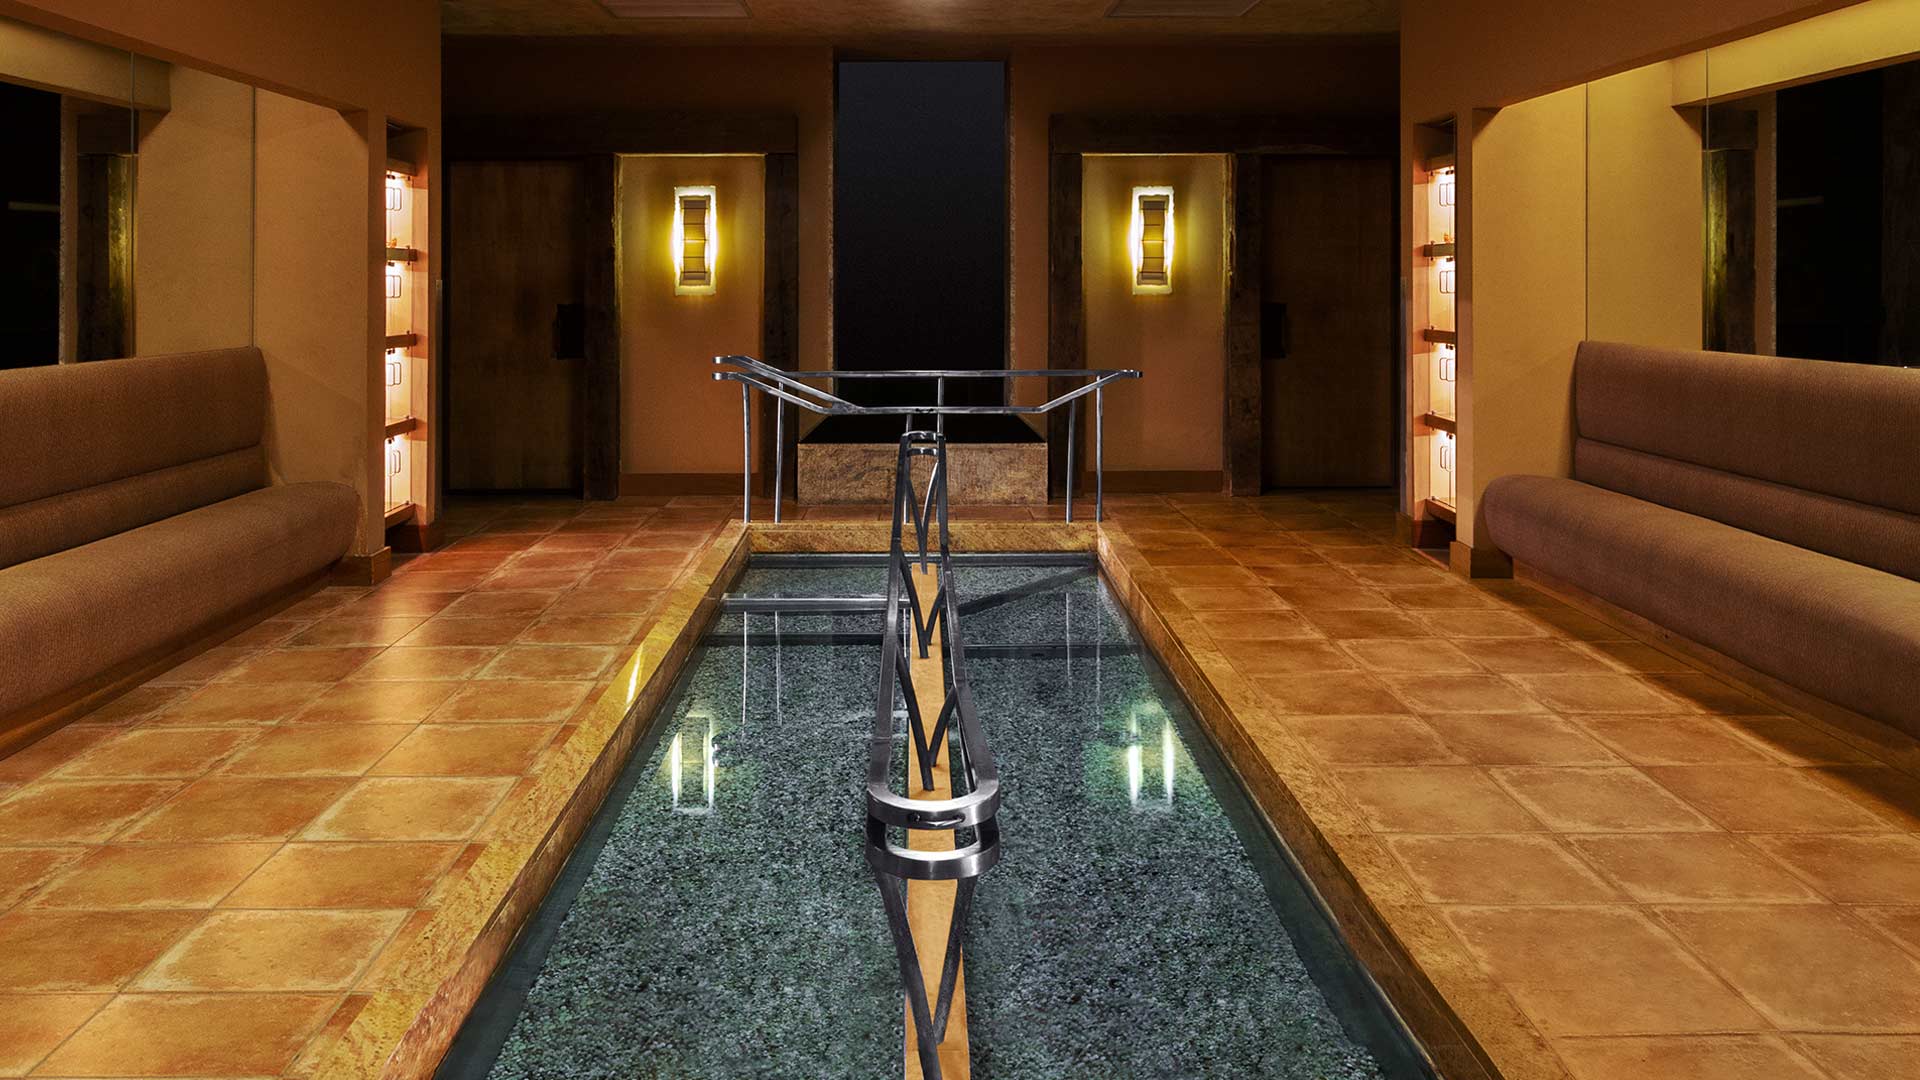 dark, warming interiors surround a thin, long dipping pool